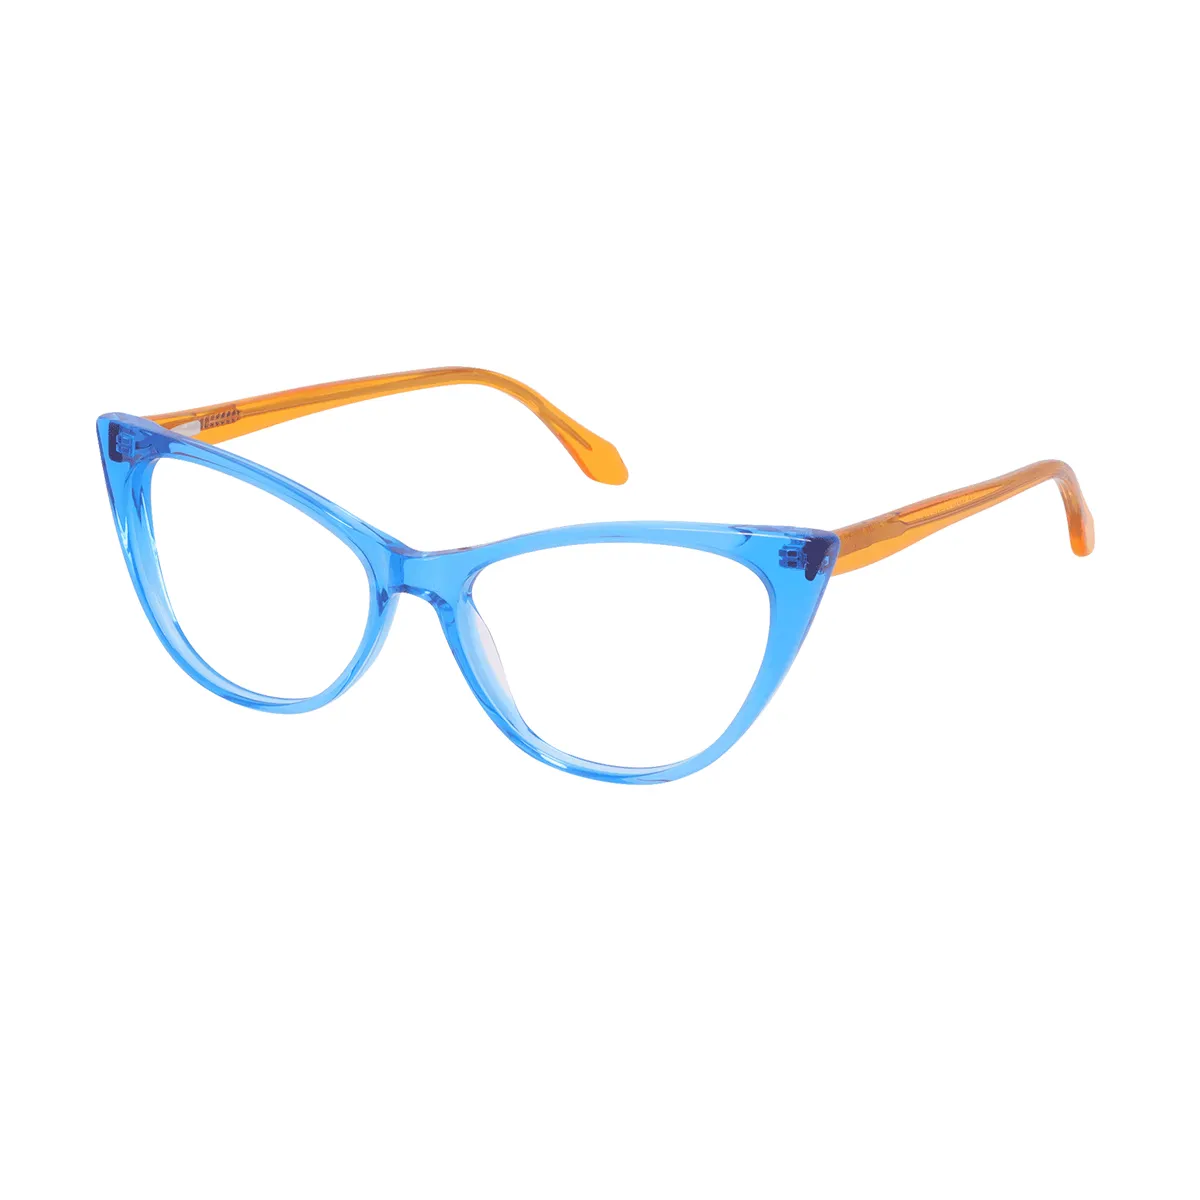 Angelica - Cat-eye Blue-Yellow Glasses for Women